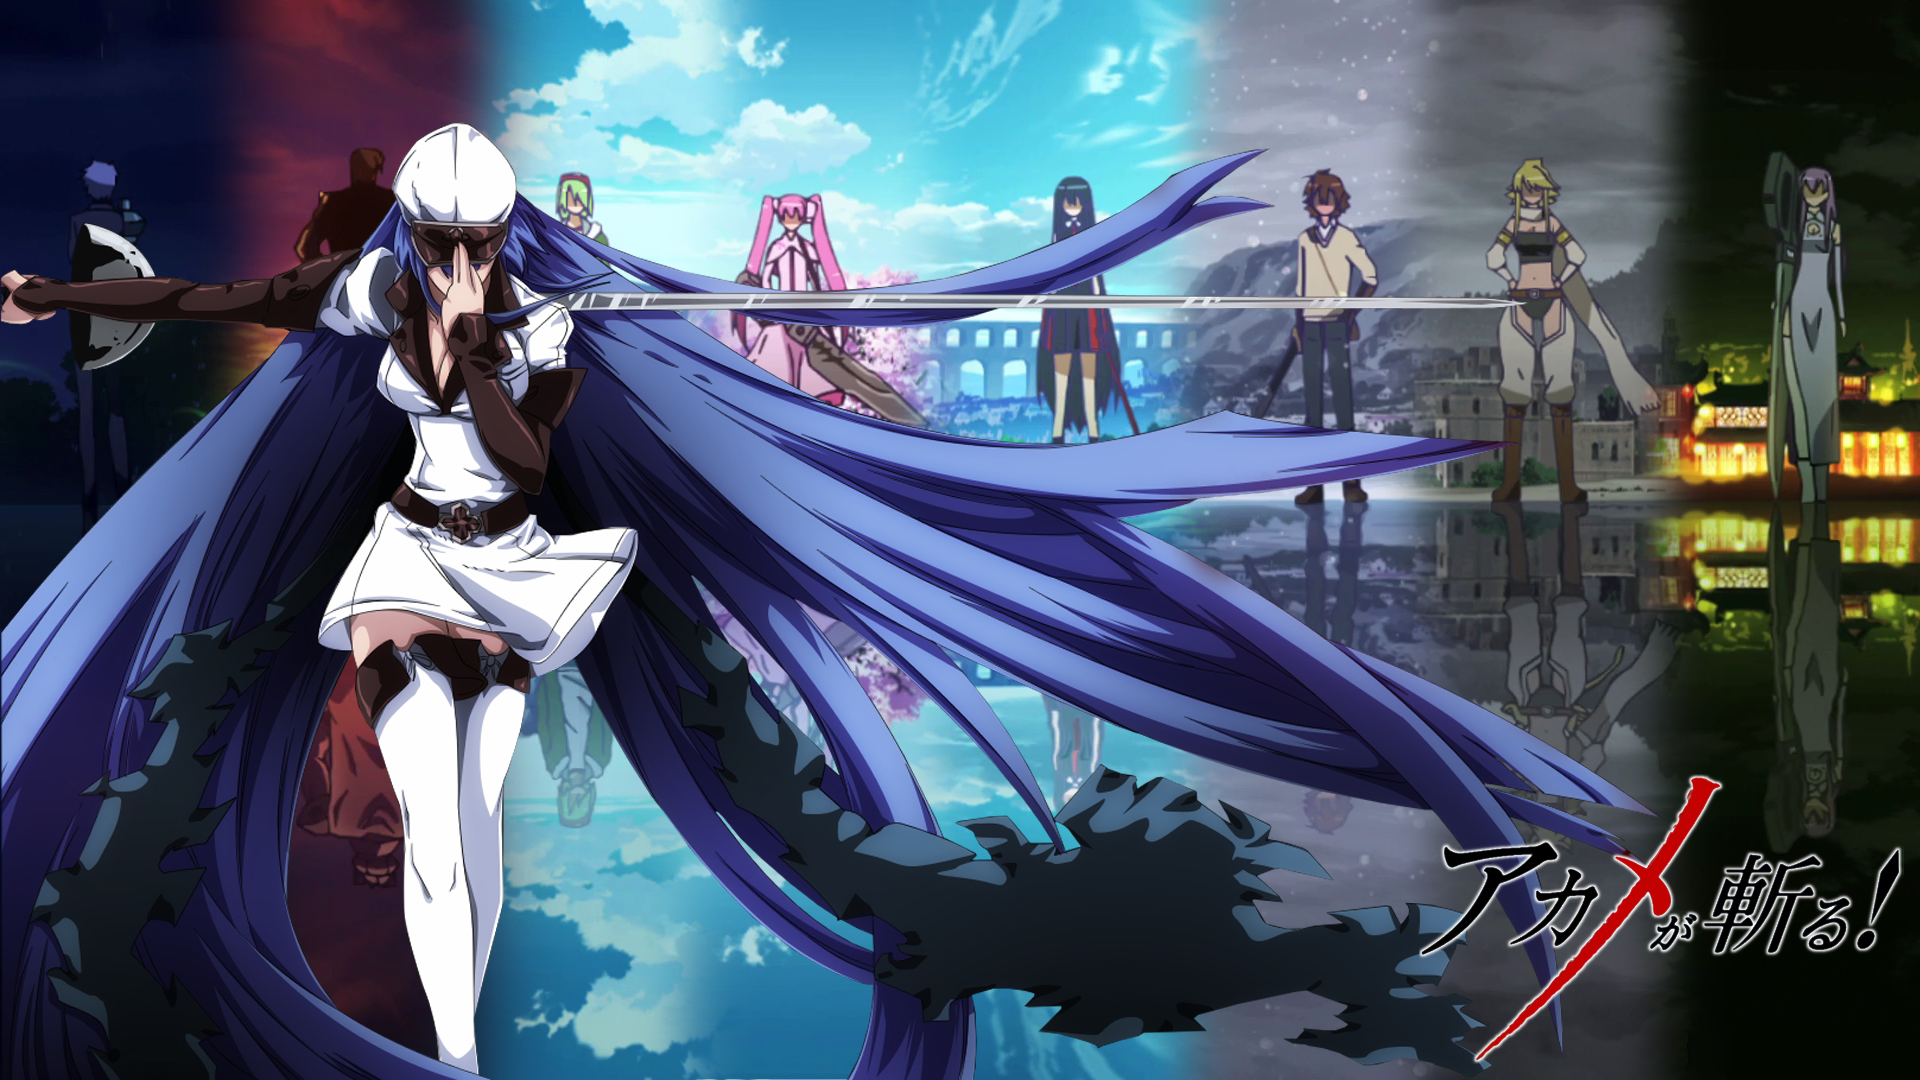 Akame Ga Kill Poster Full HD Wallpaper And Background Image